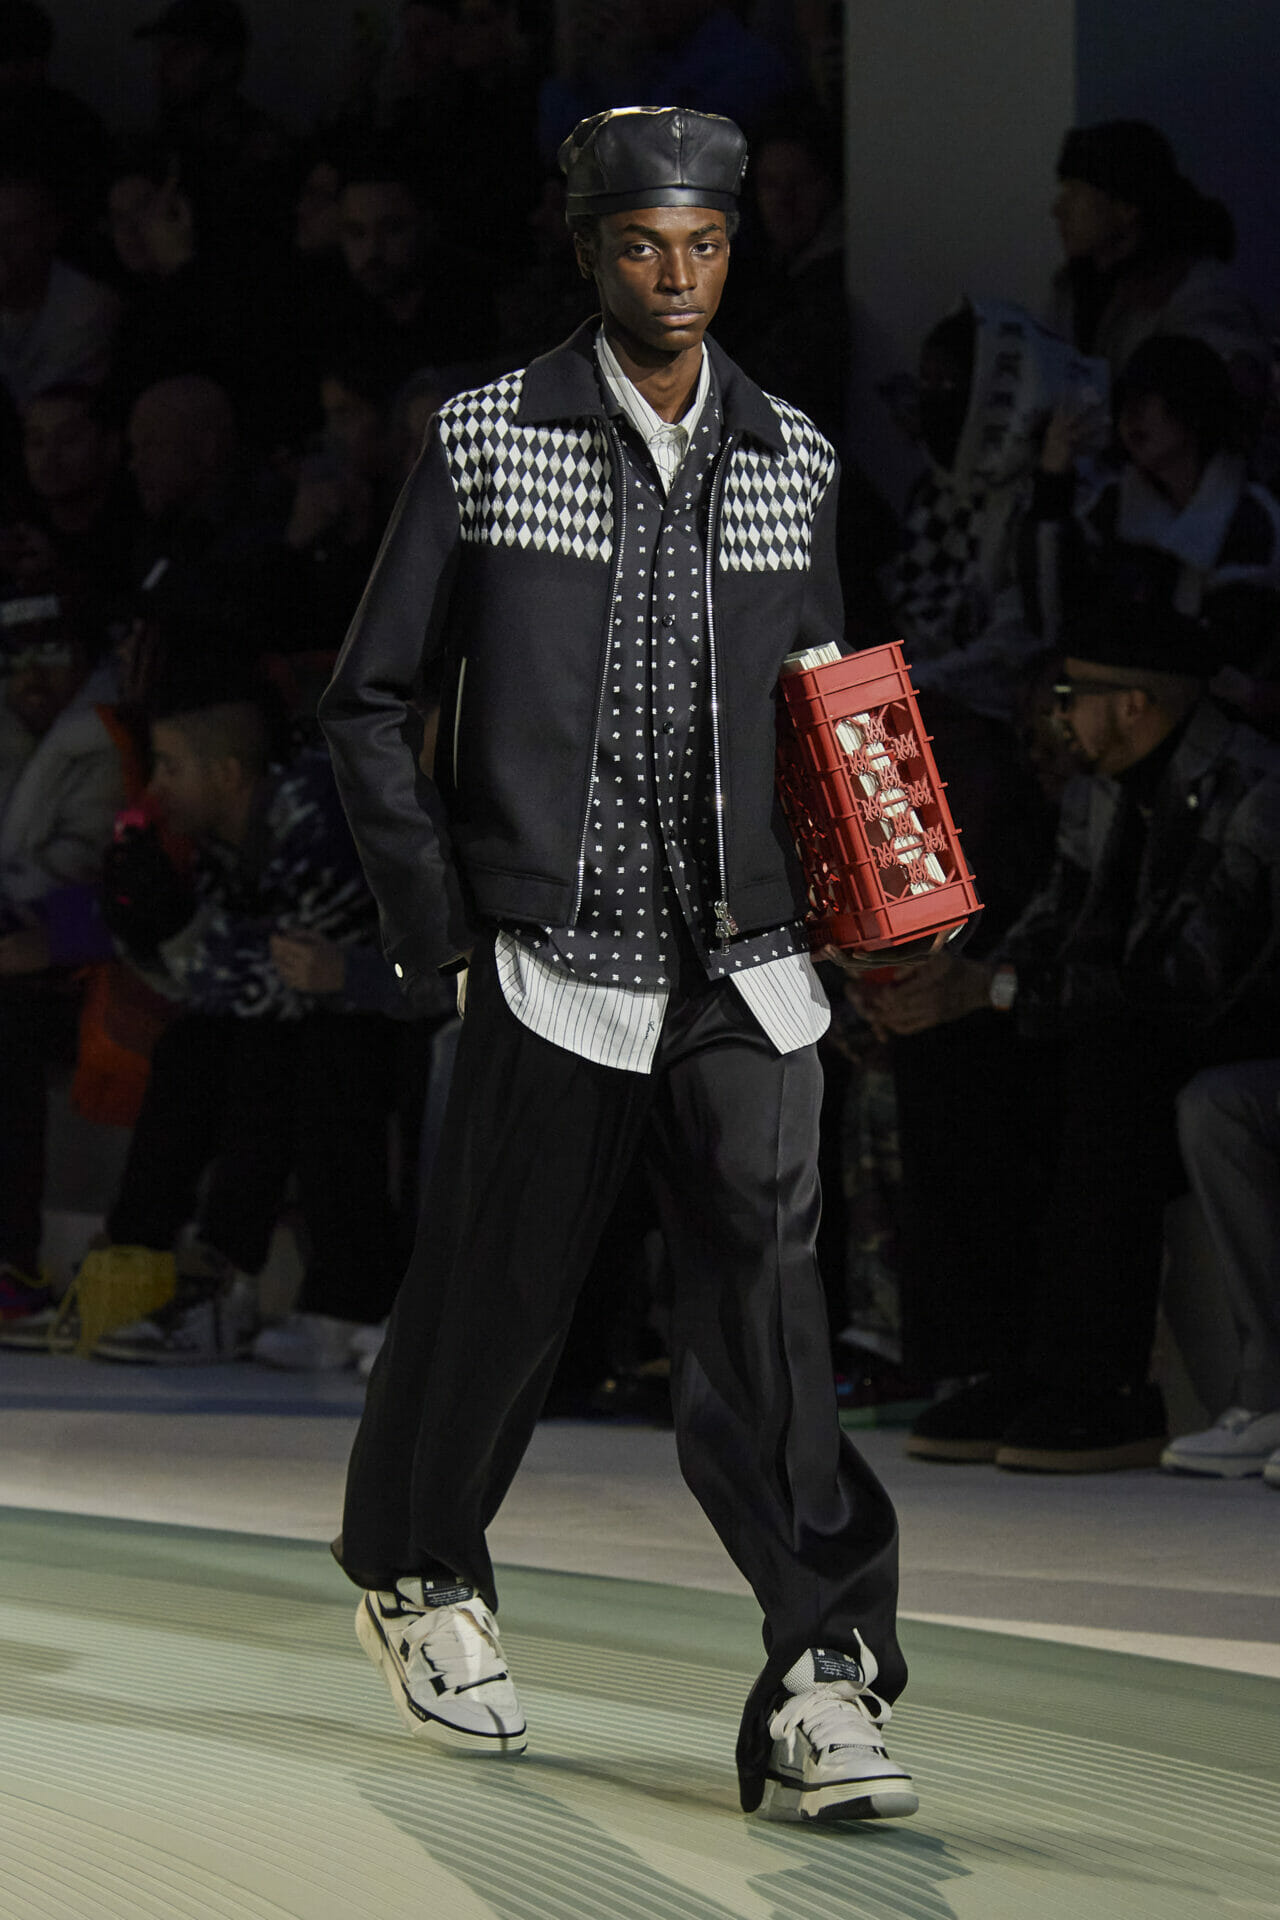 Louis Vuitton Puffer Jacket Men's Nigo Embroidered Lv